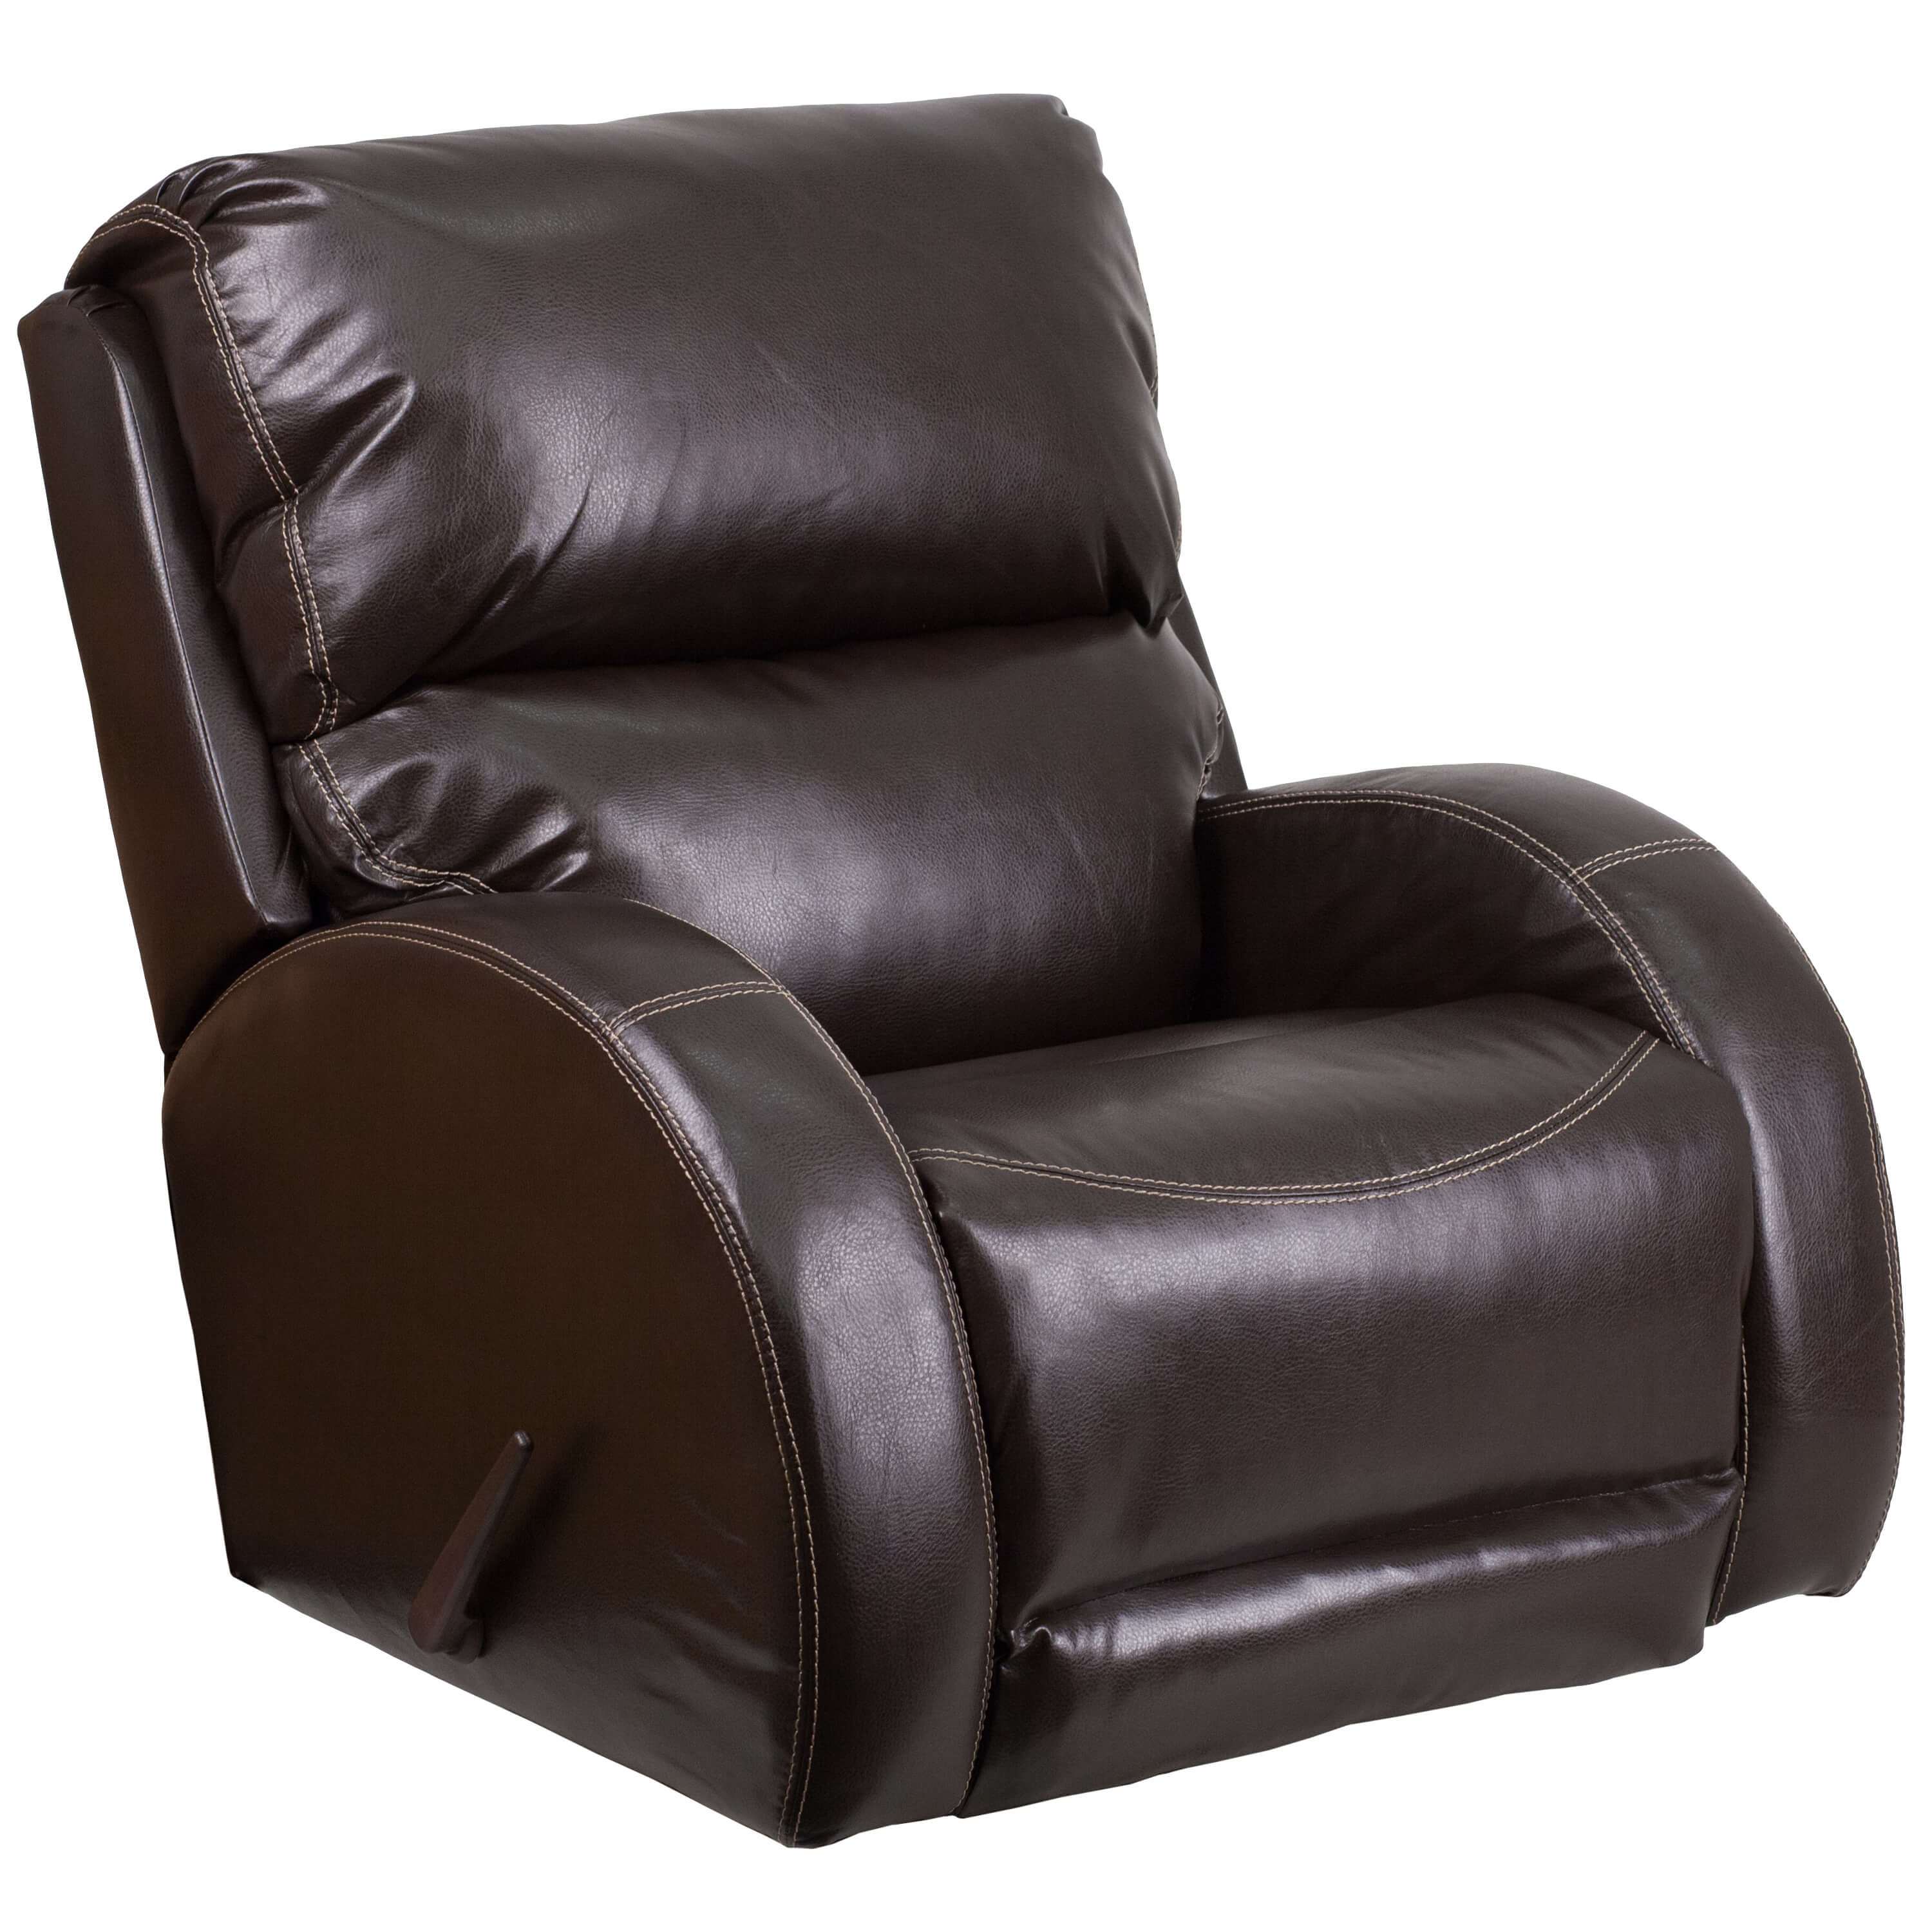 Modern recliner chair CUB WA 4990 620 GG FLA